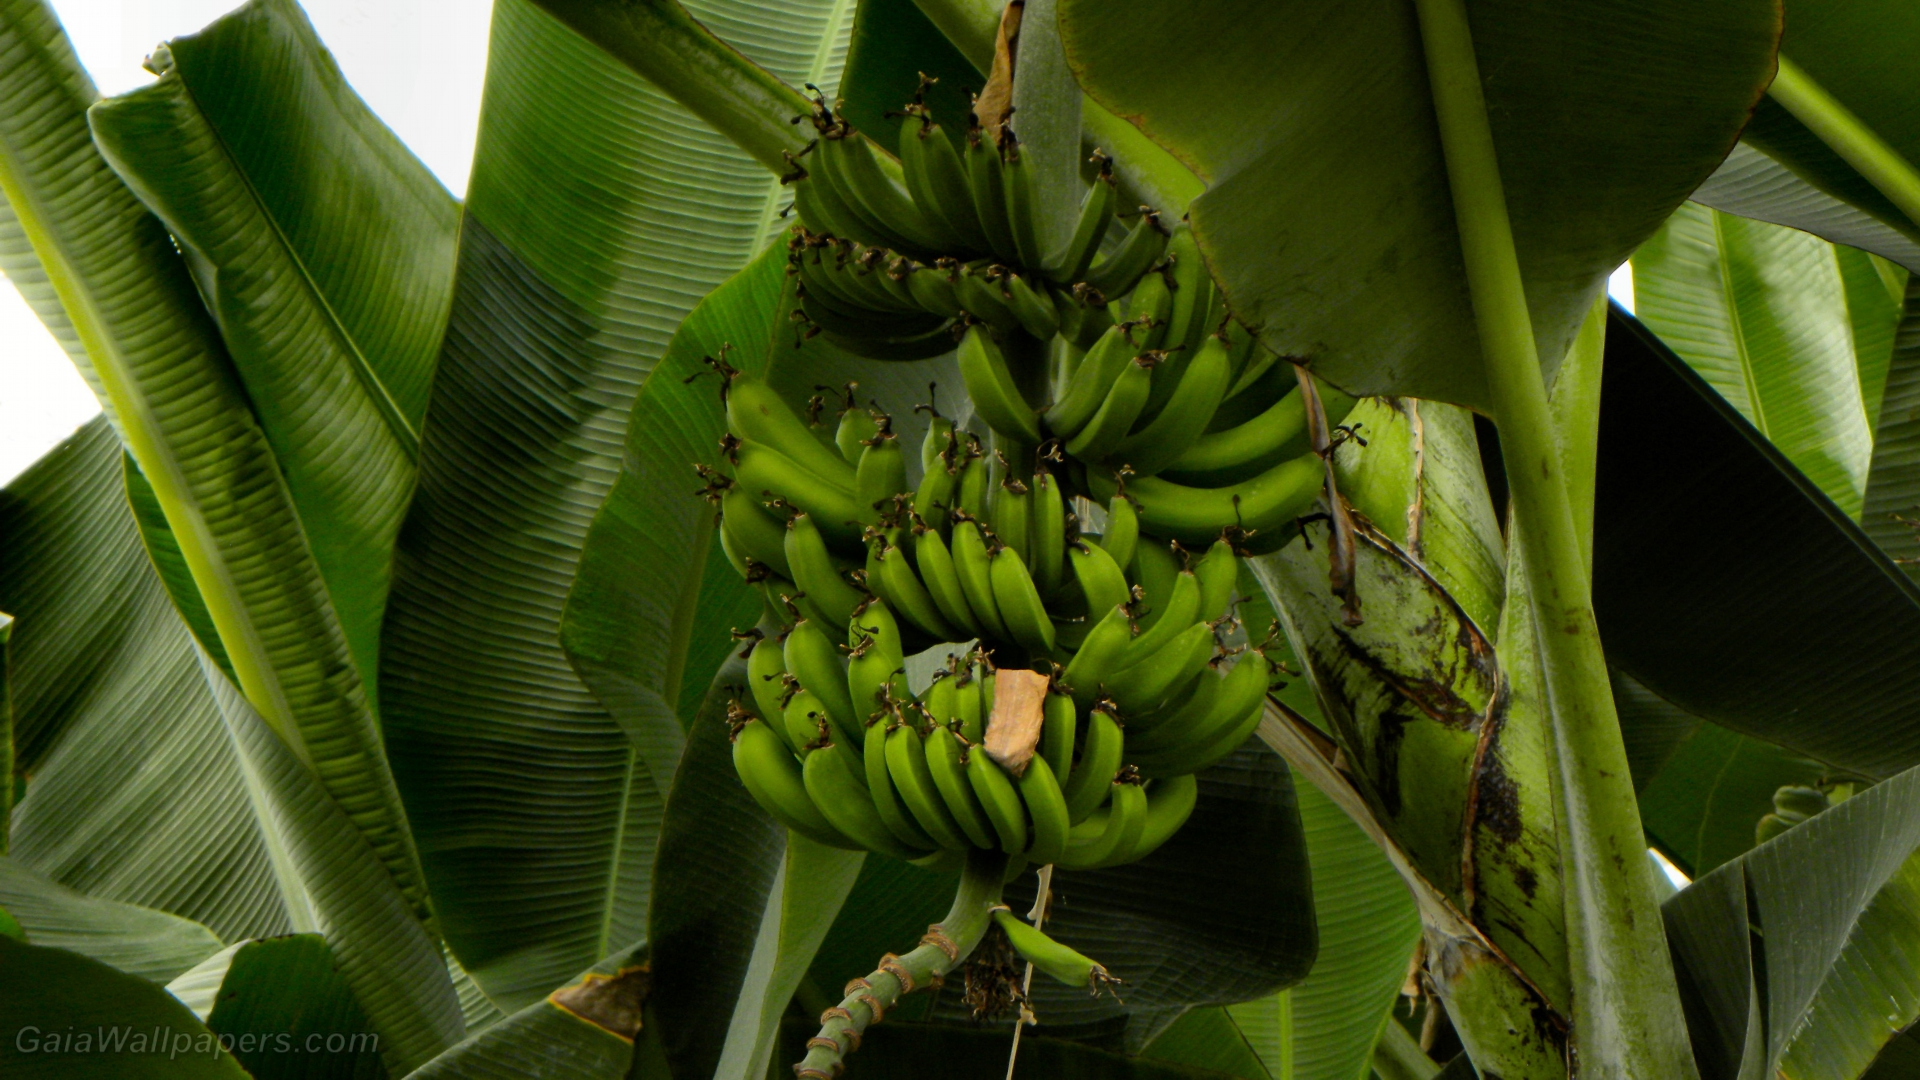 Green bananas in a banana tree - Free desktop wallpapers